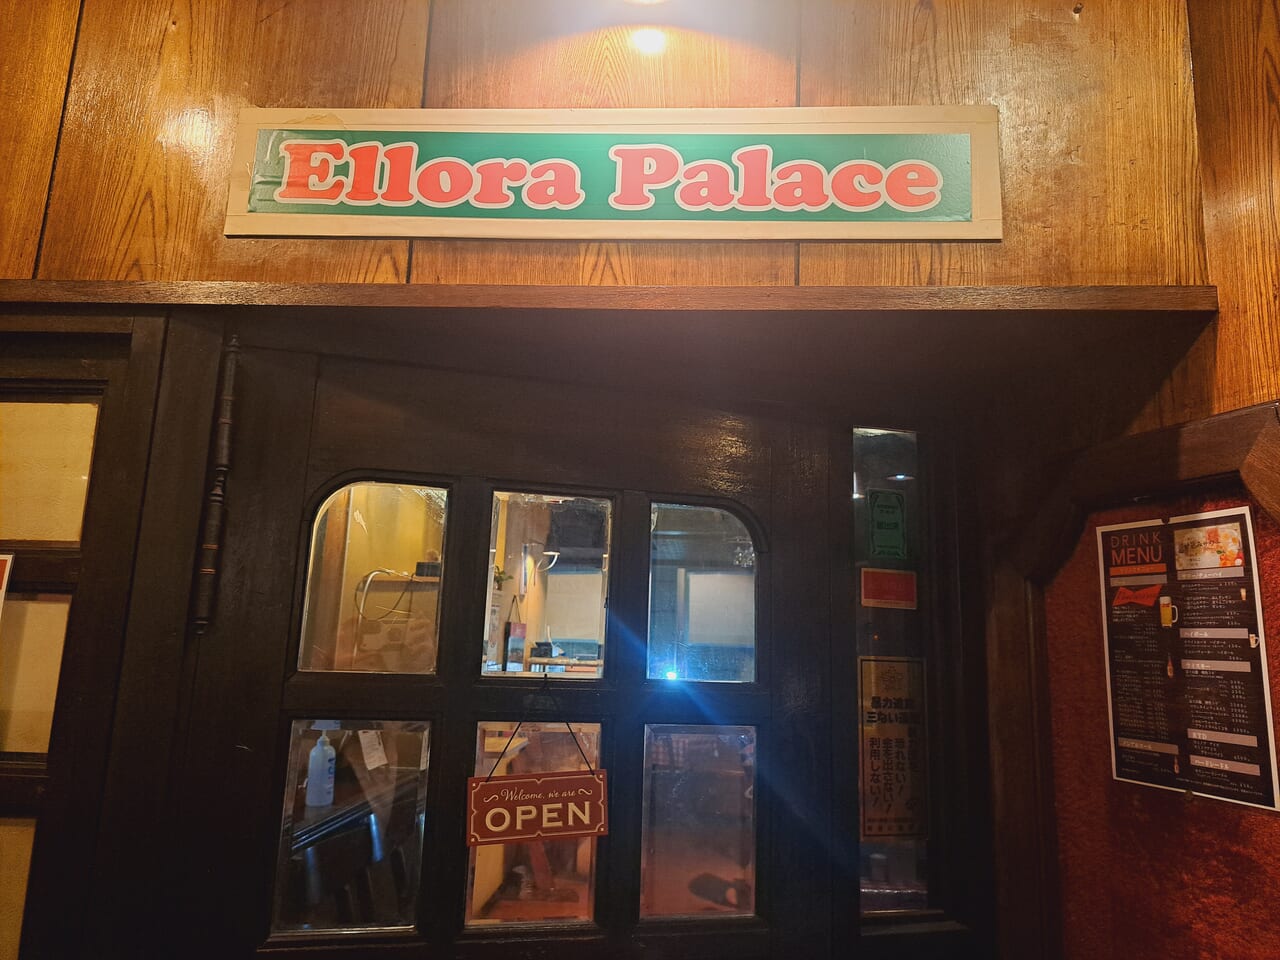 Ellora Palace